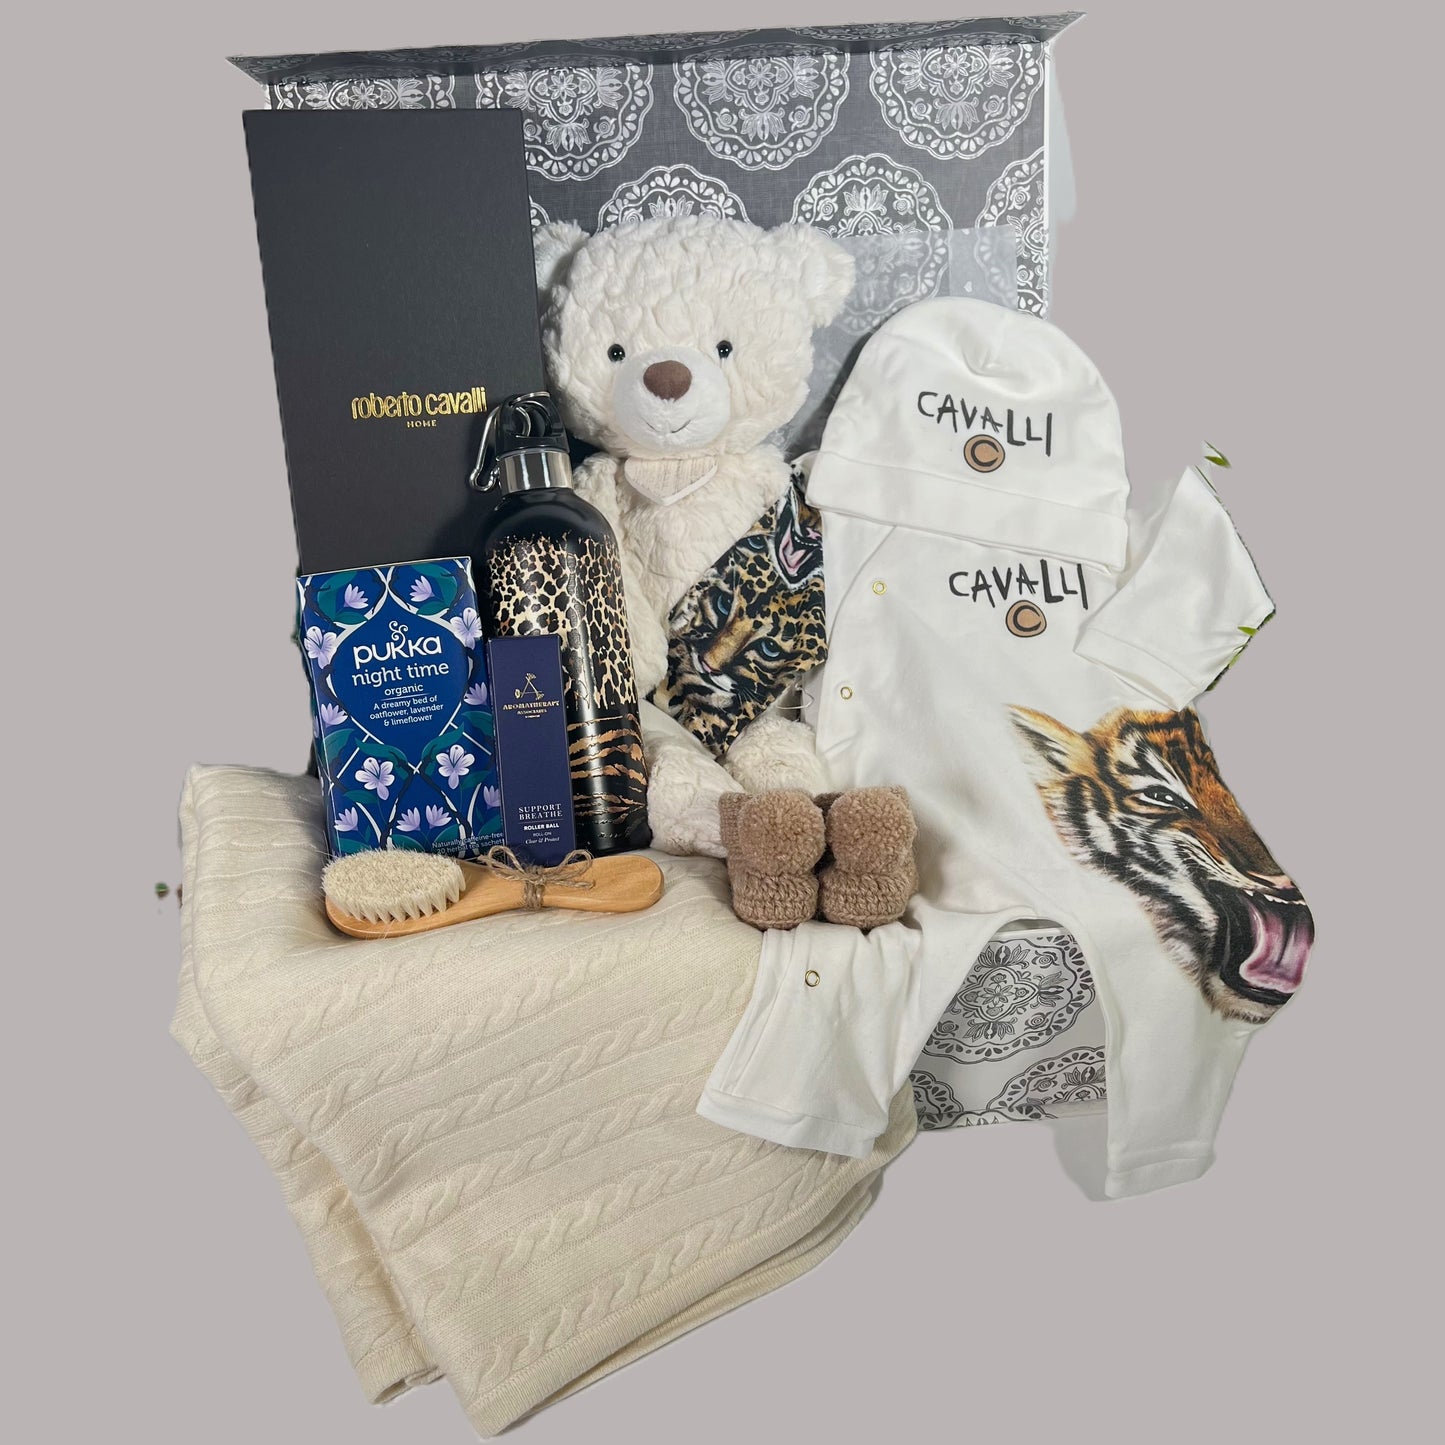 Luxury New Parents Baby Hamper Gift, Cashmere Soft Baby Blanket, Roberto Cavalli Baby Sleepsuit, Roberto Cavalli Water Bottle, Corporate Baby Gifts